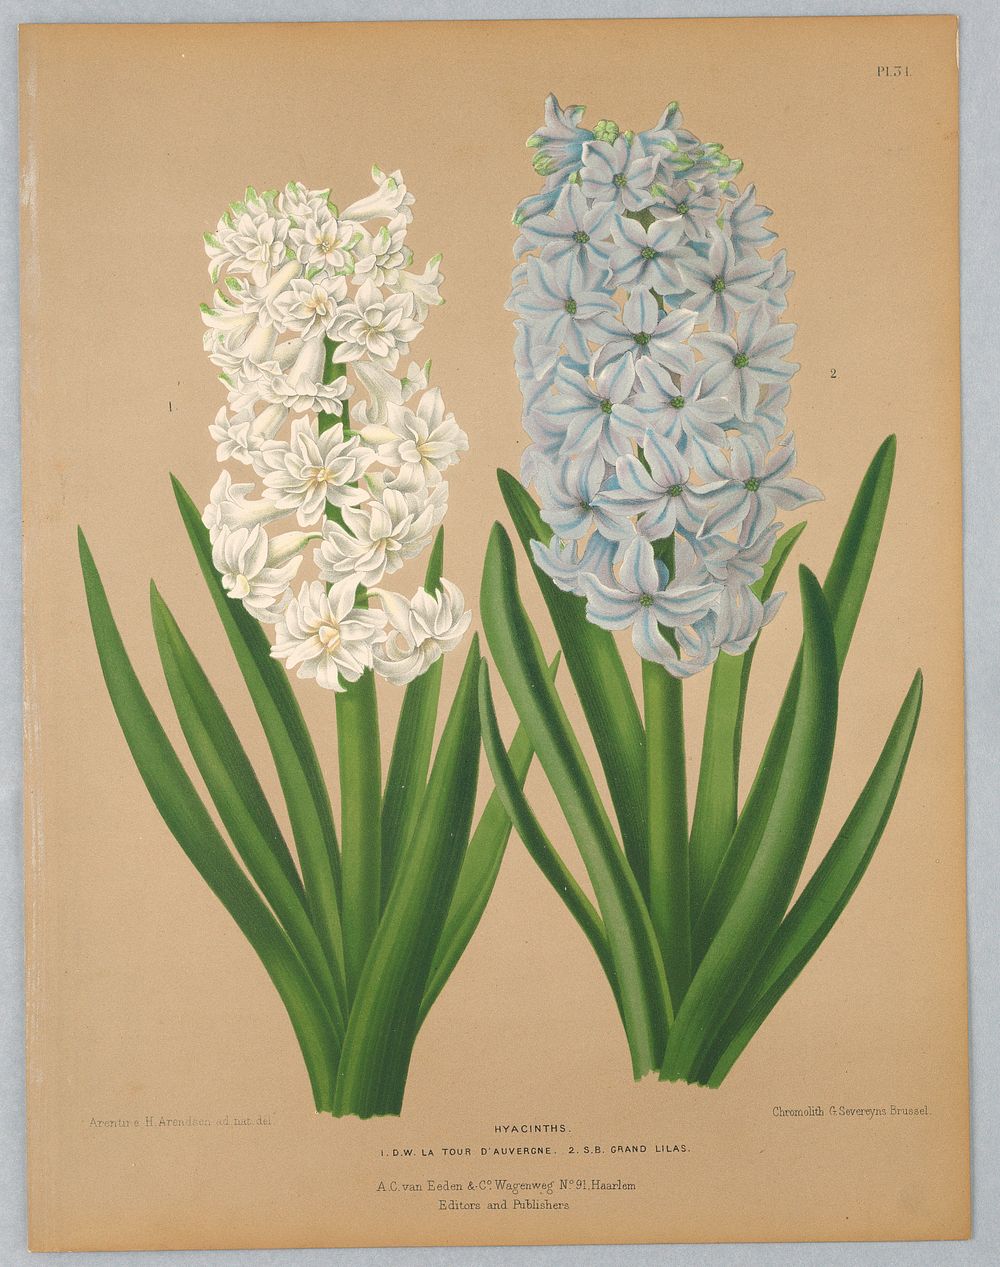 Hyacinths, Plate 31 from A. C. Van Eeden's "Flora of Haarlem"